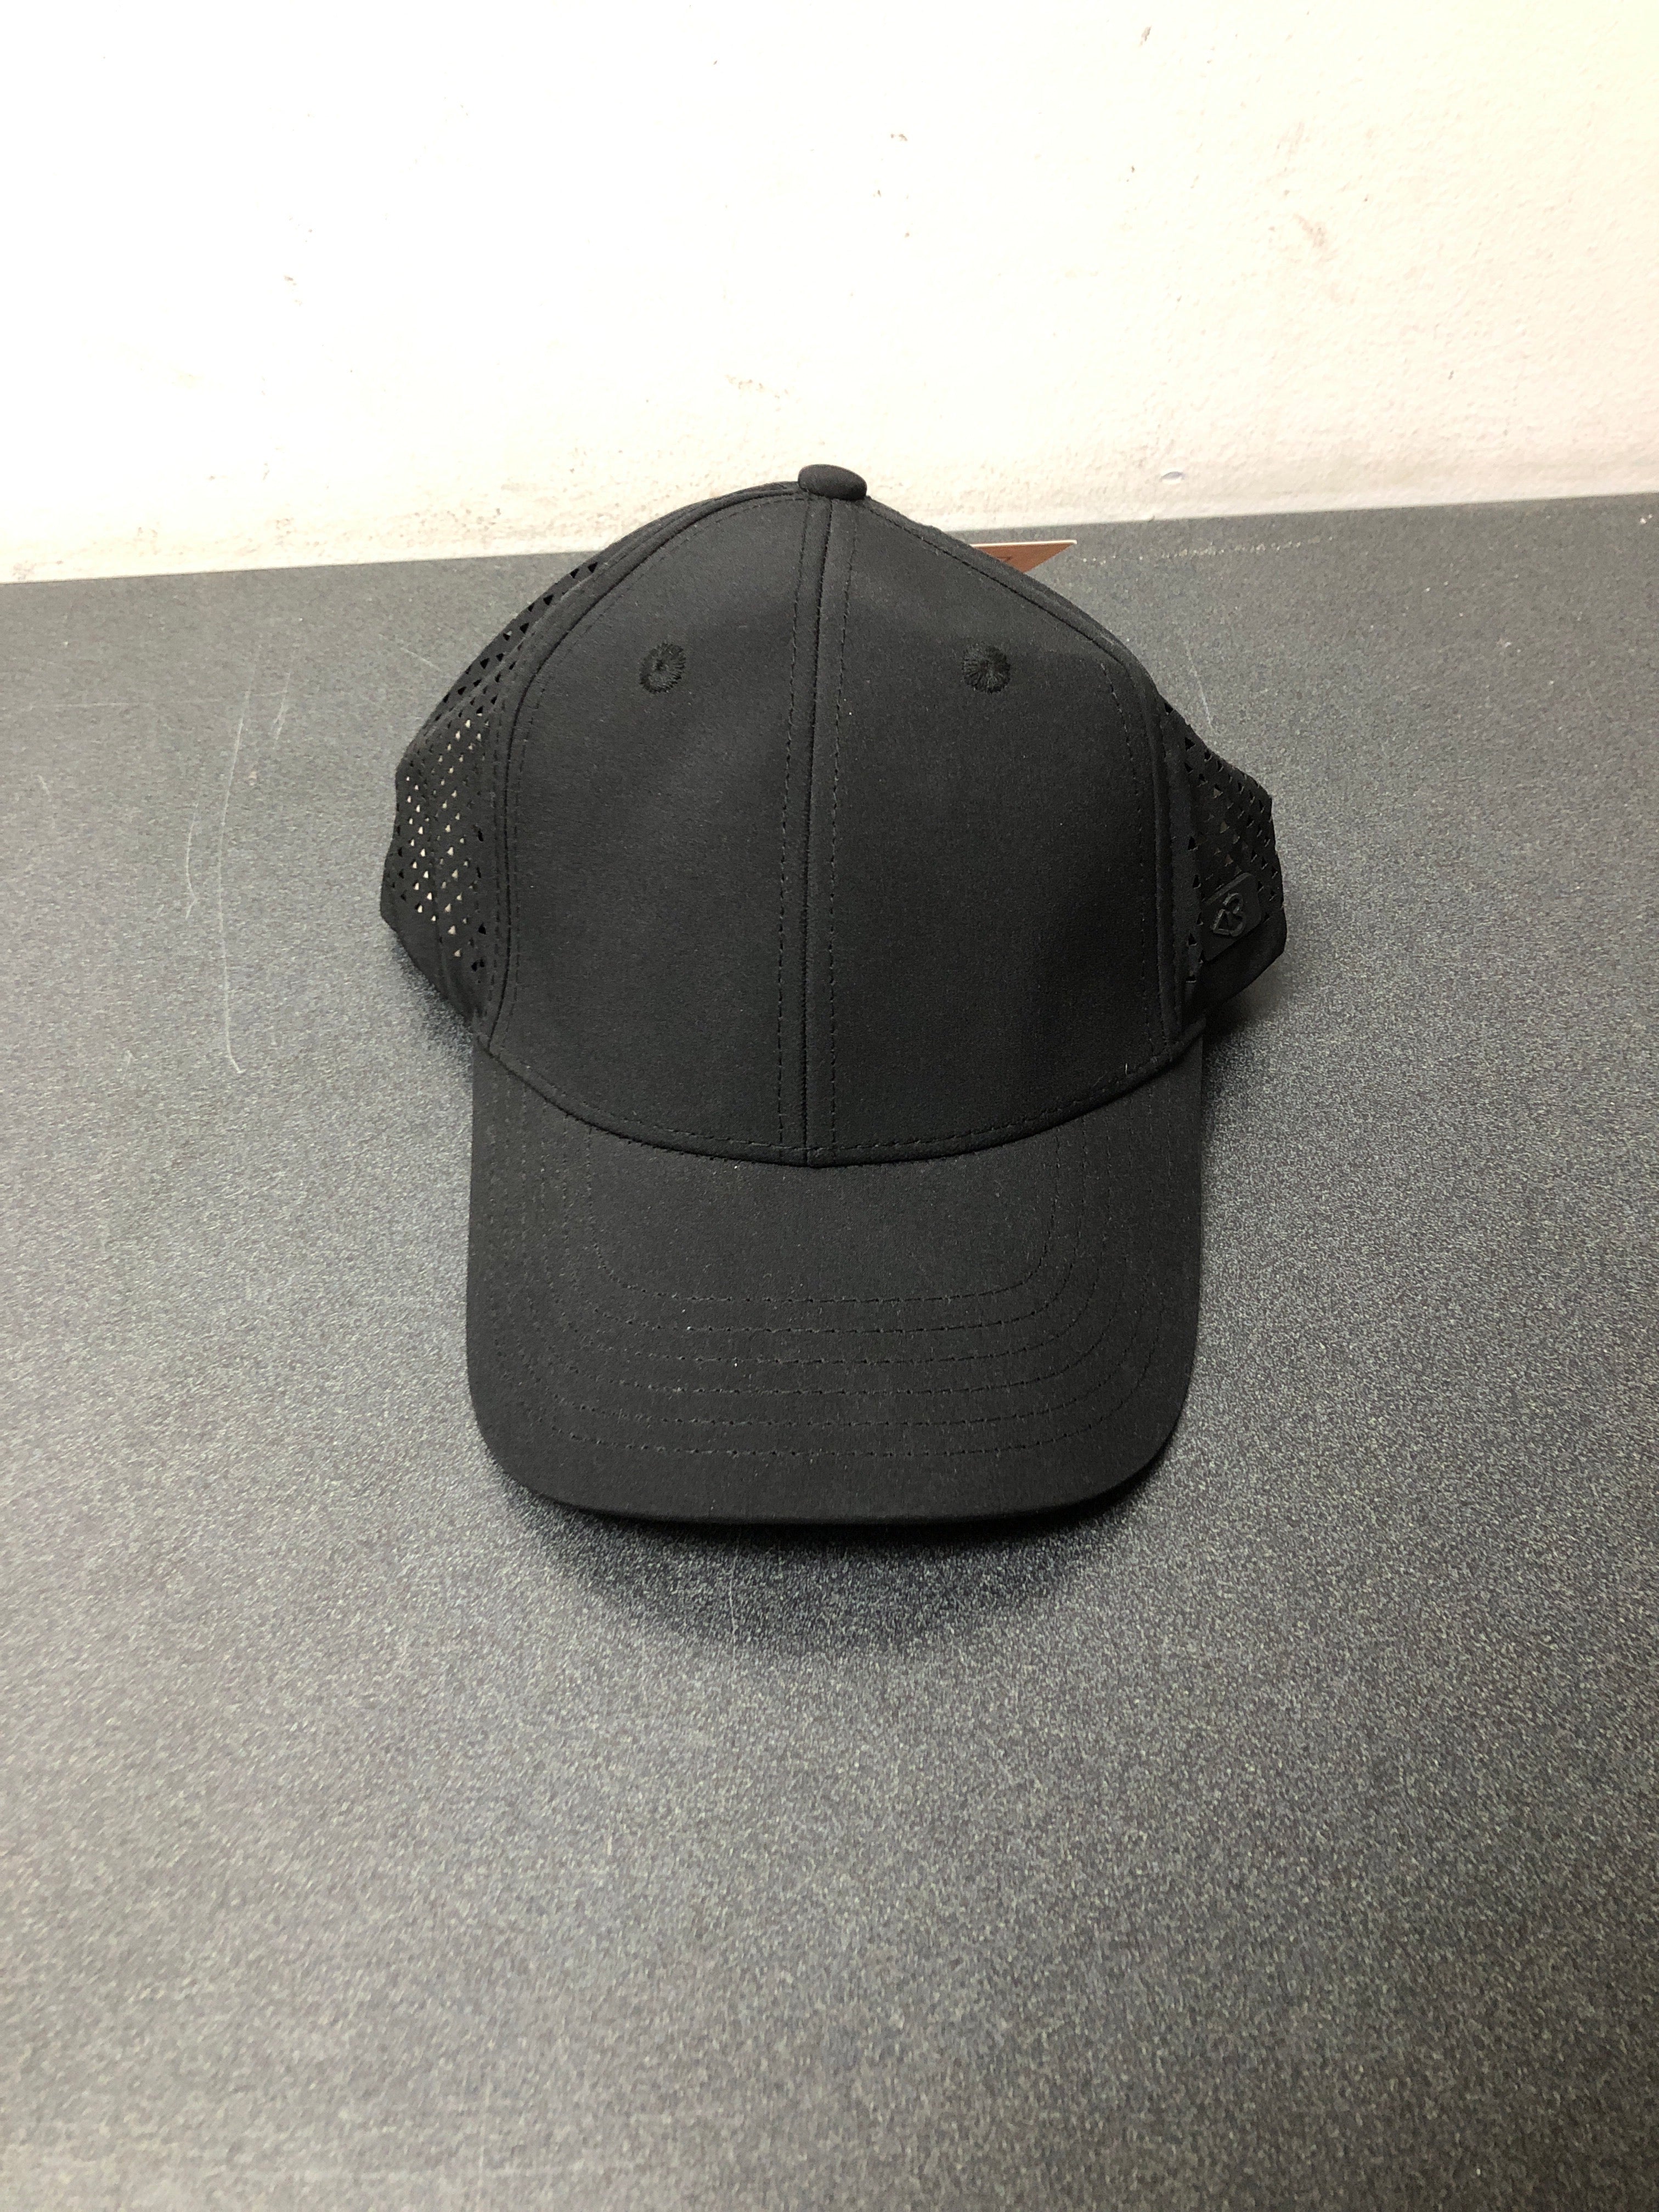 Blogilates sweat resistant hat - black